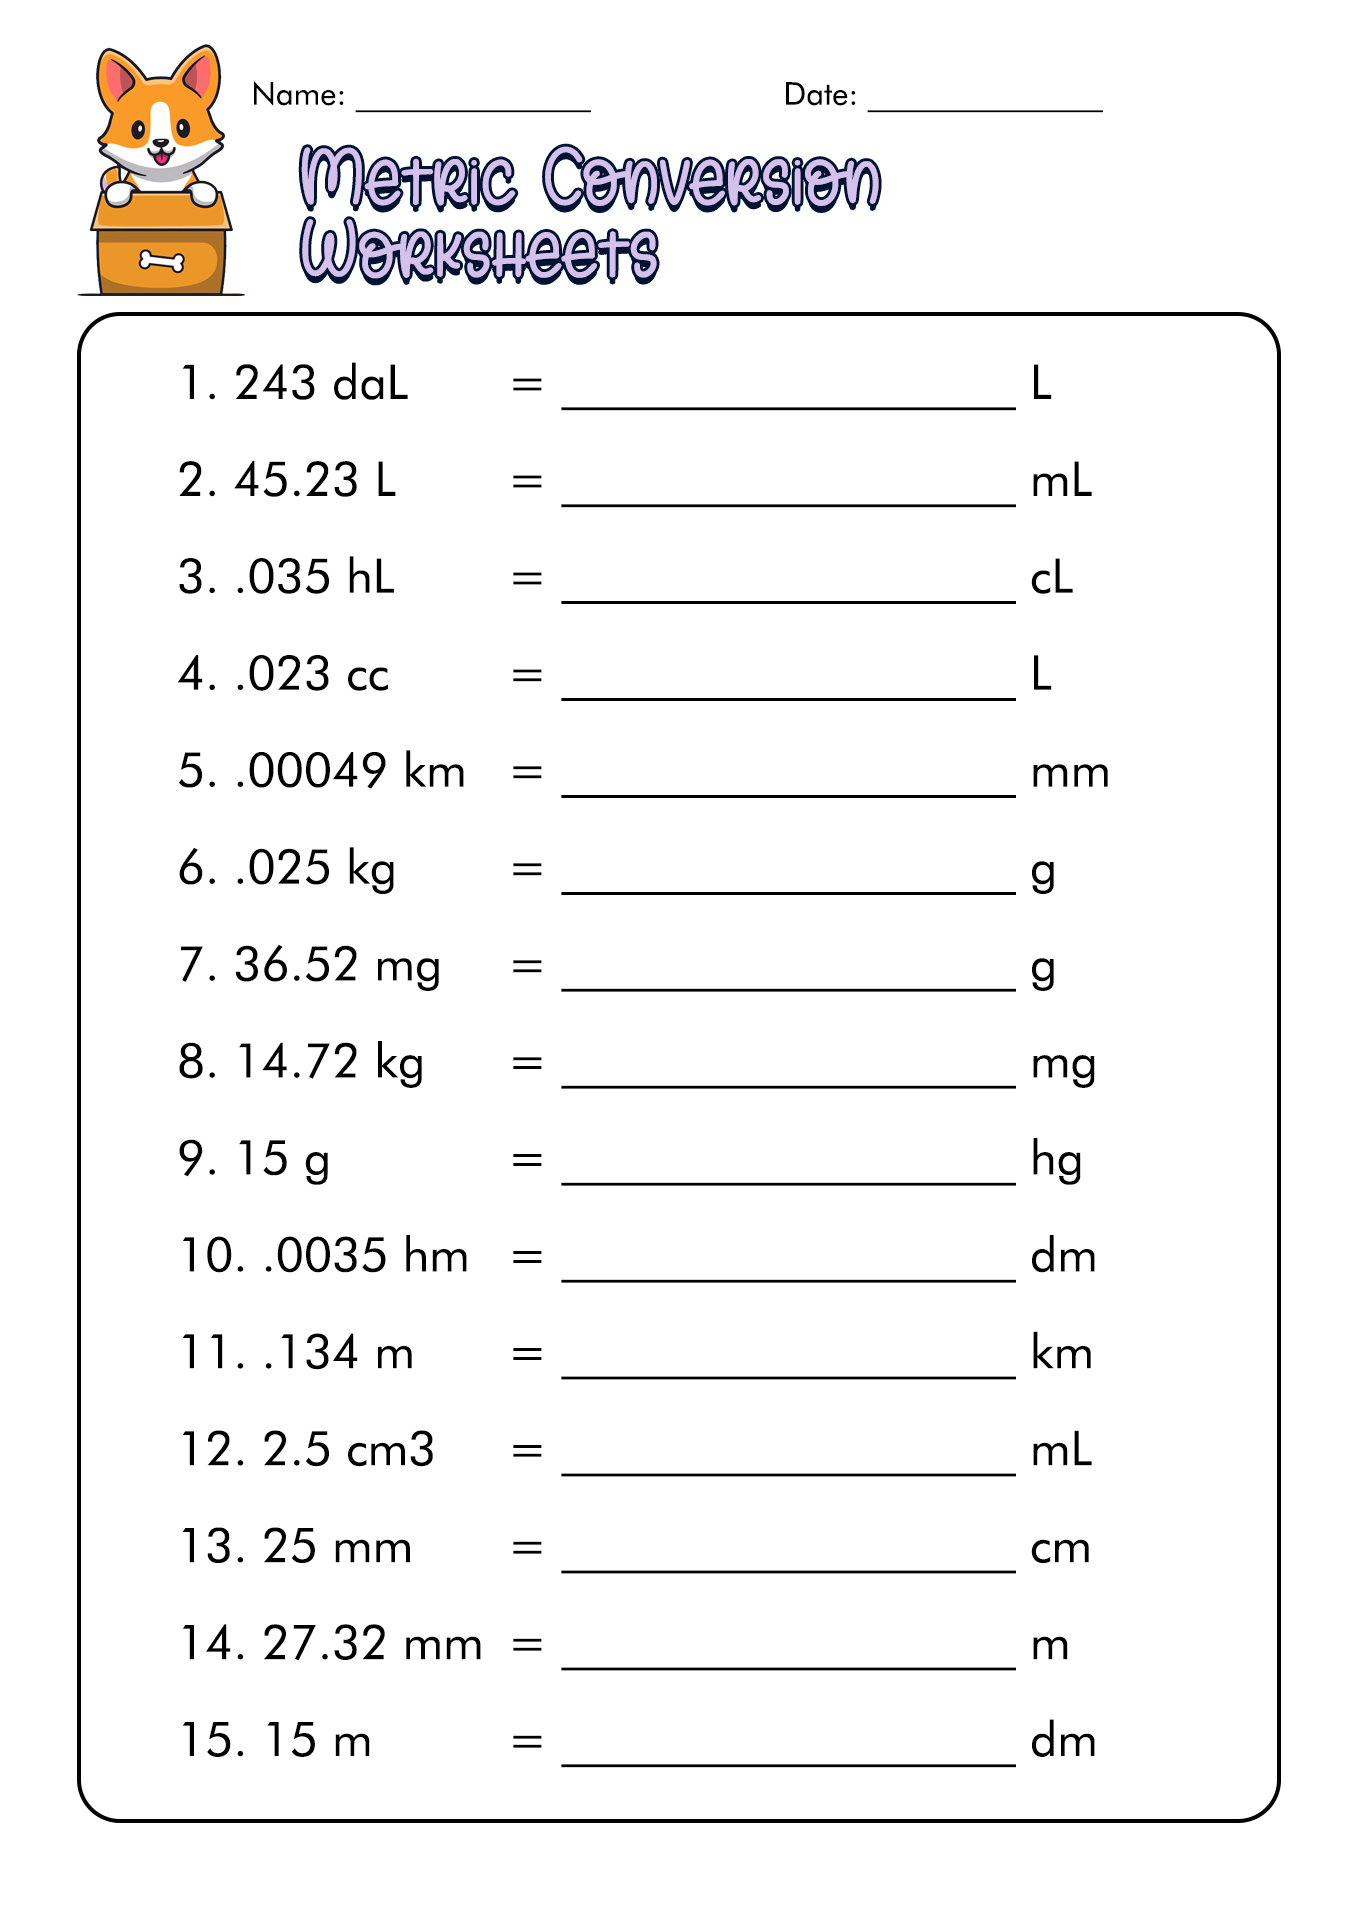 12-best-images-of-measuring-units-worksheet-answer-key-metric-unit